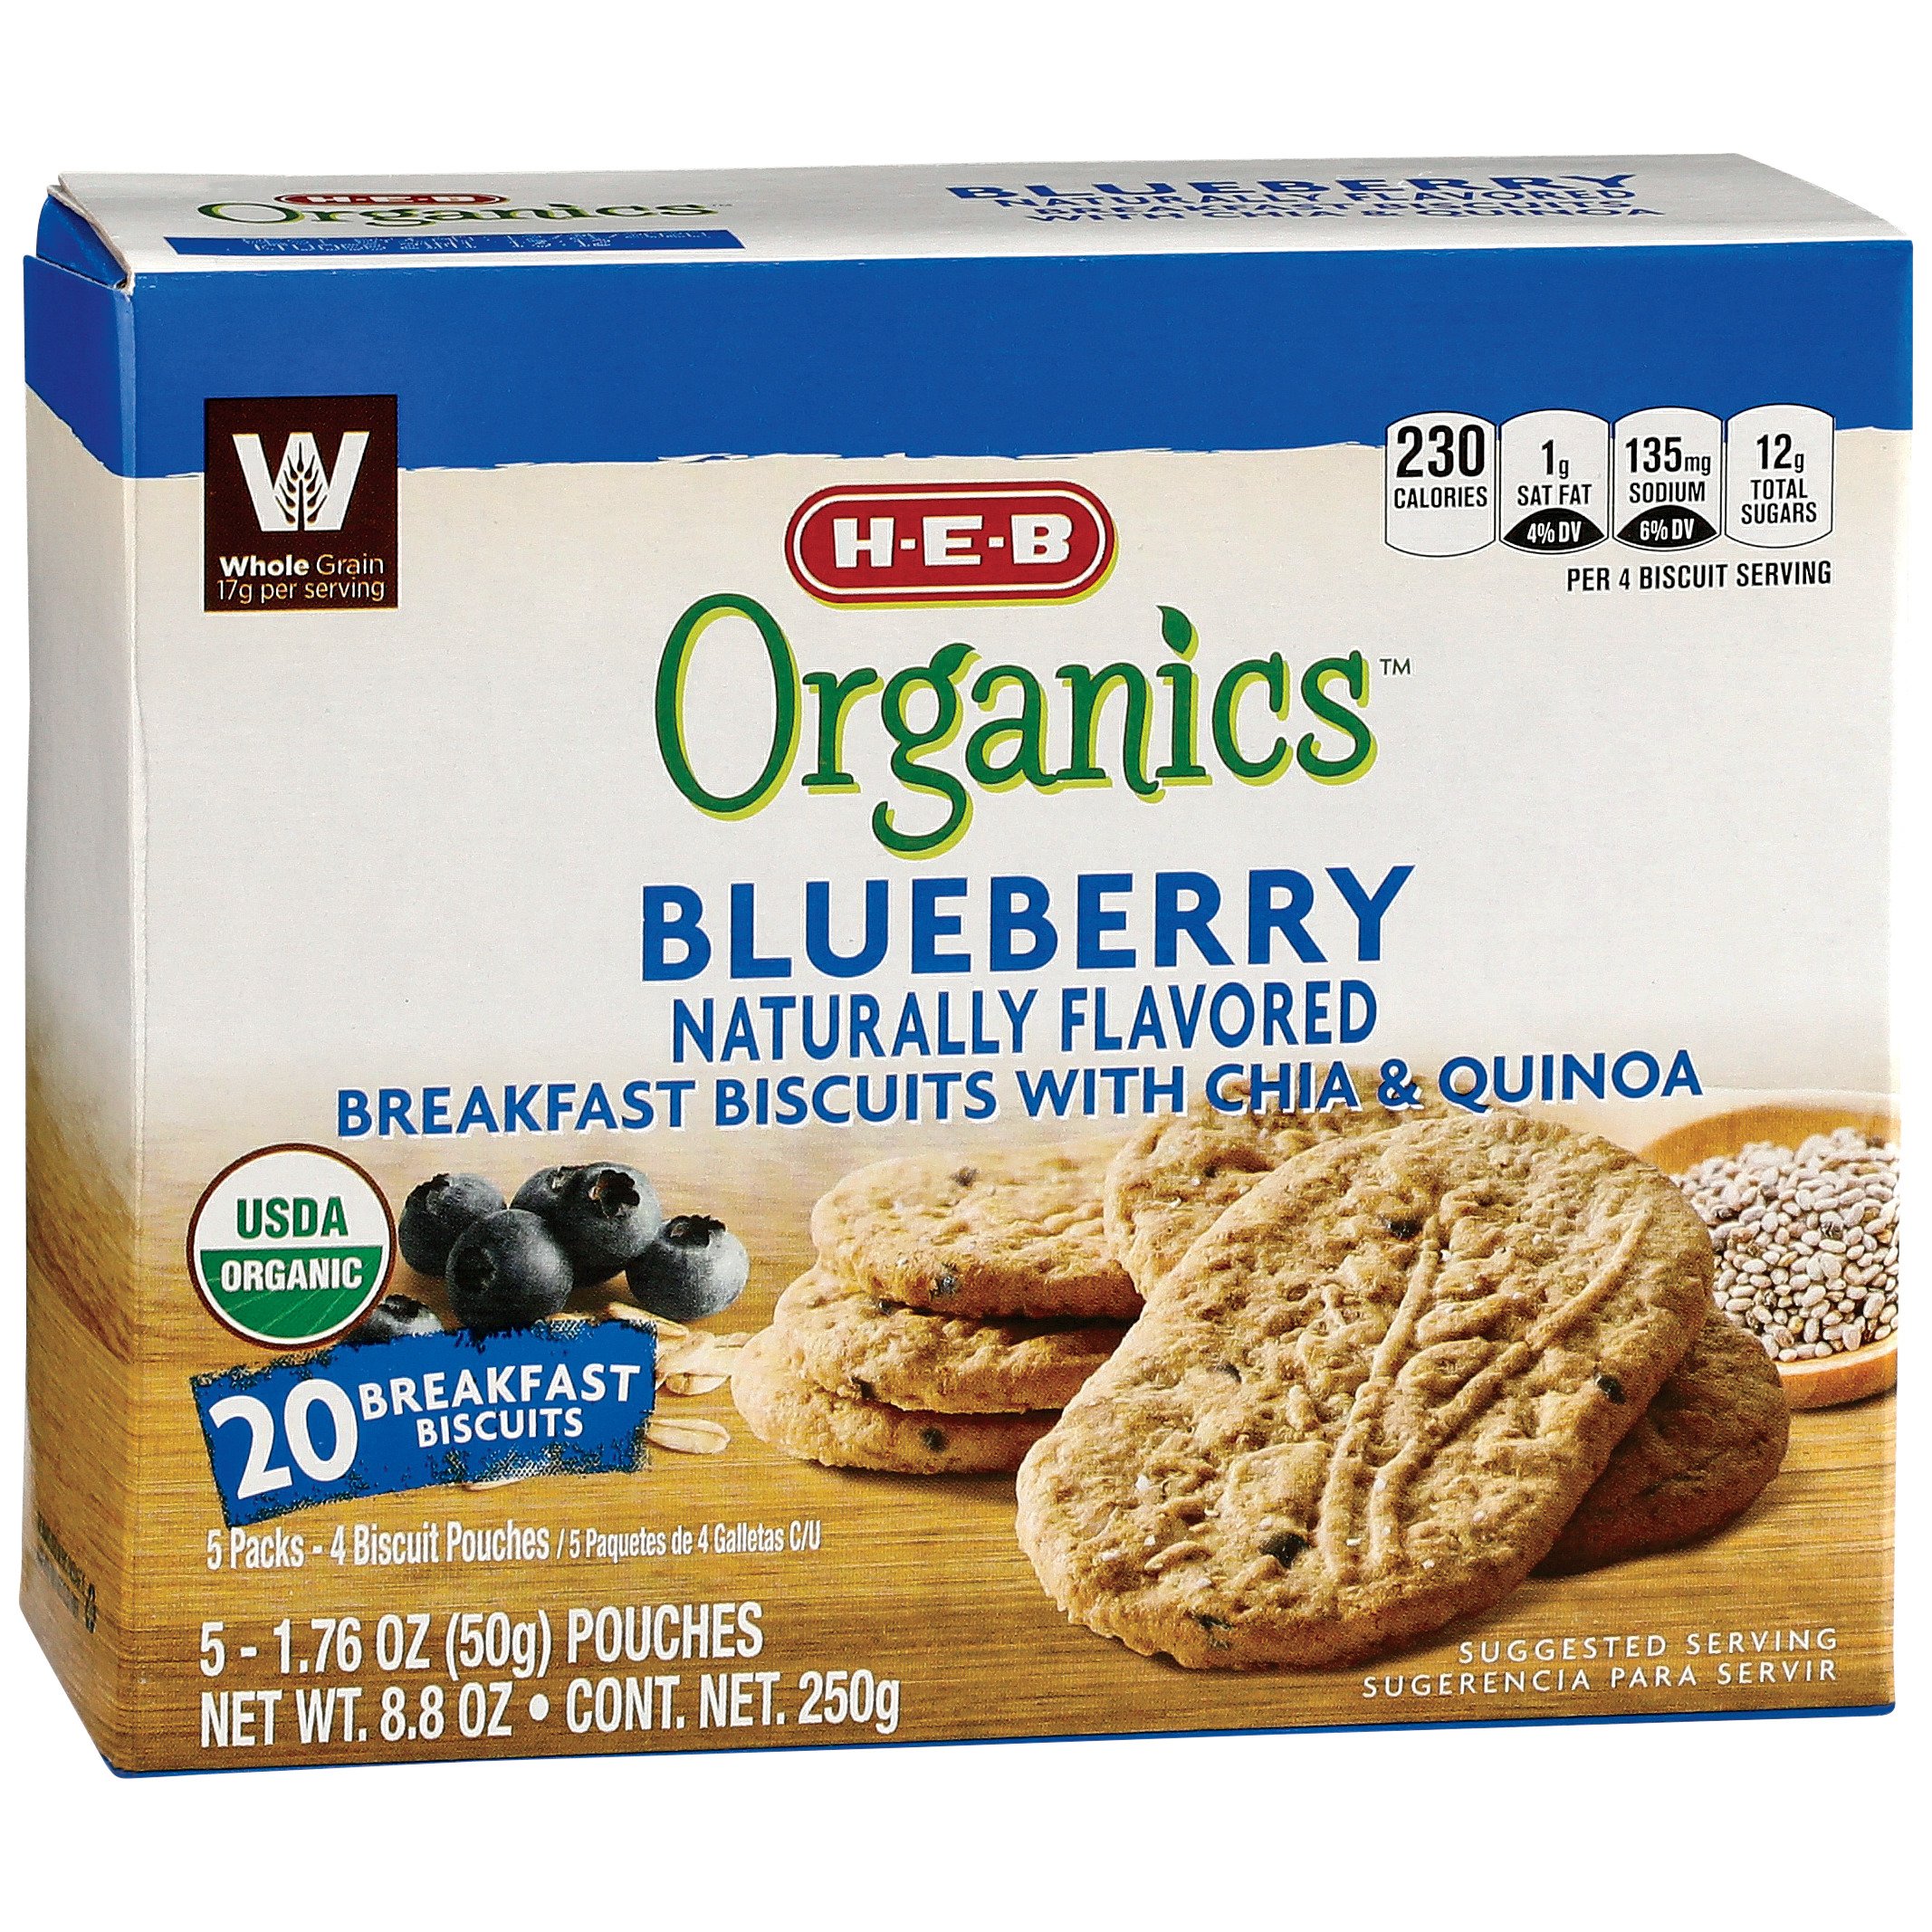 Belvita Blueberry Breakfast Biscuits Review